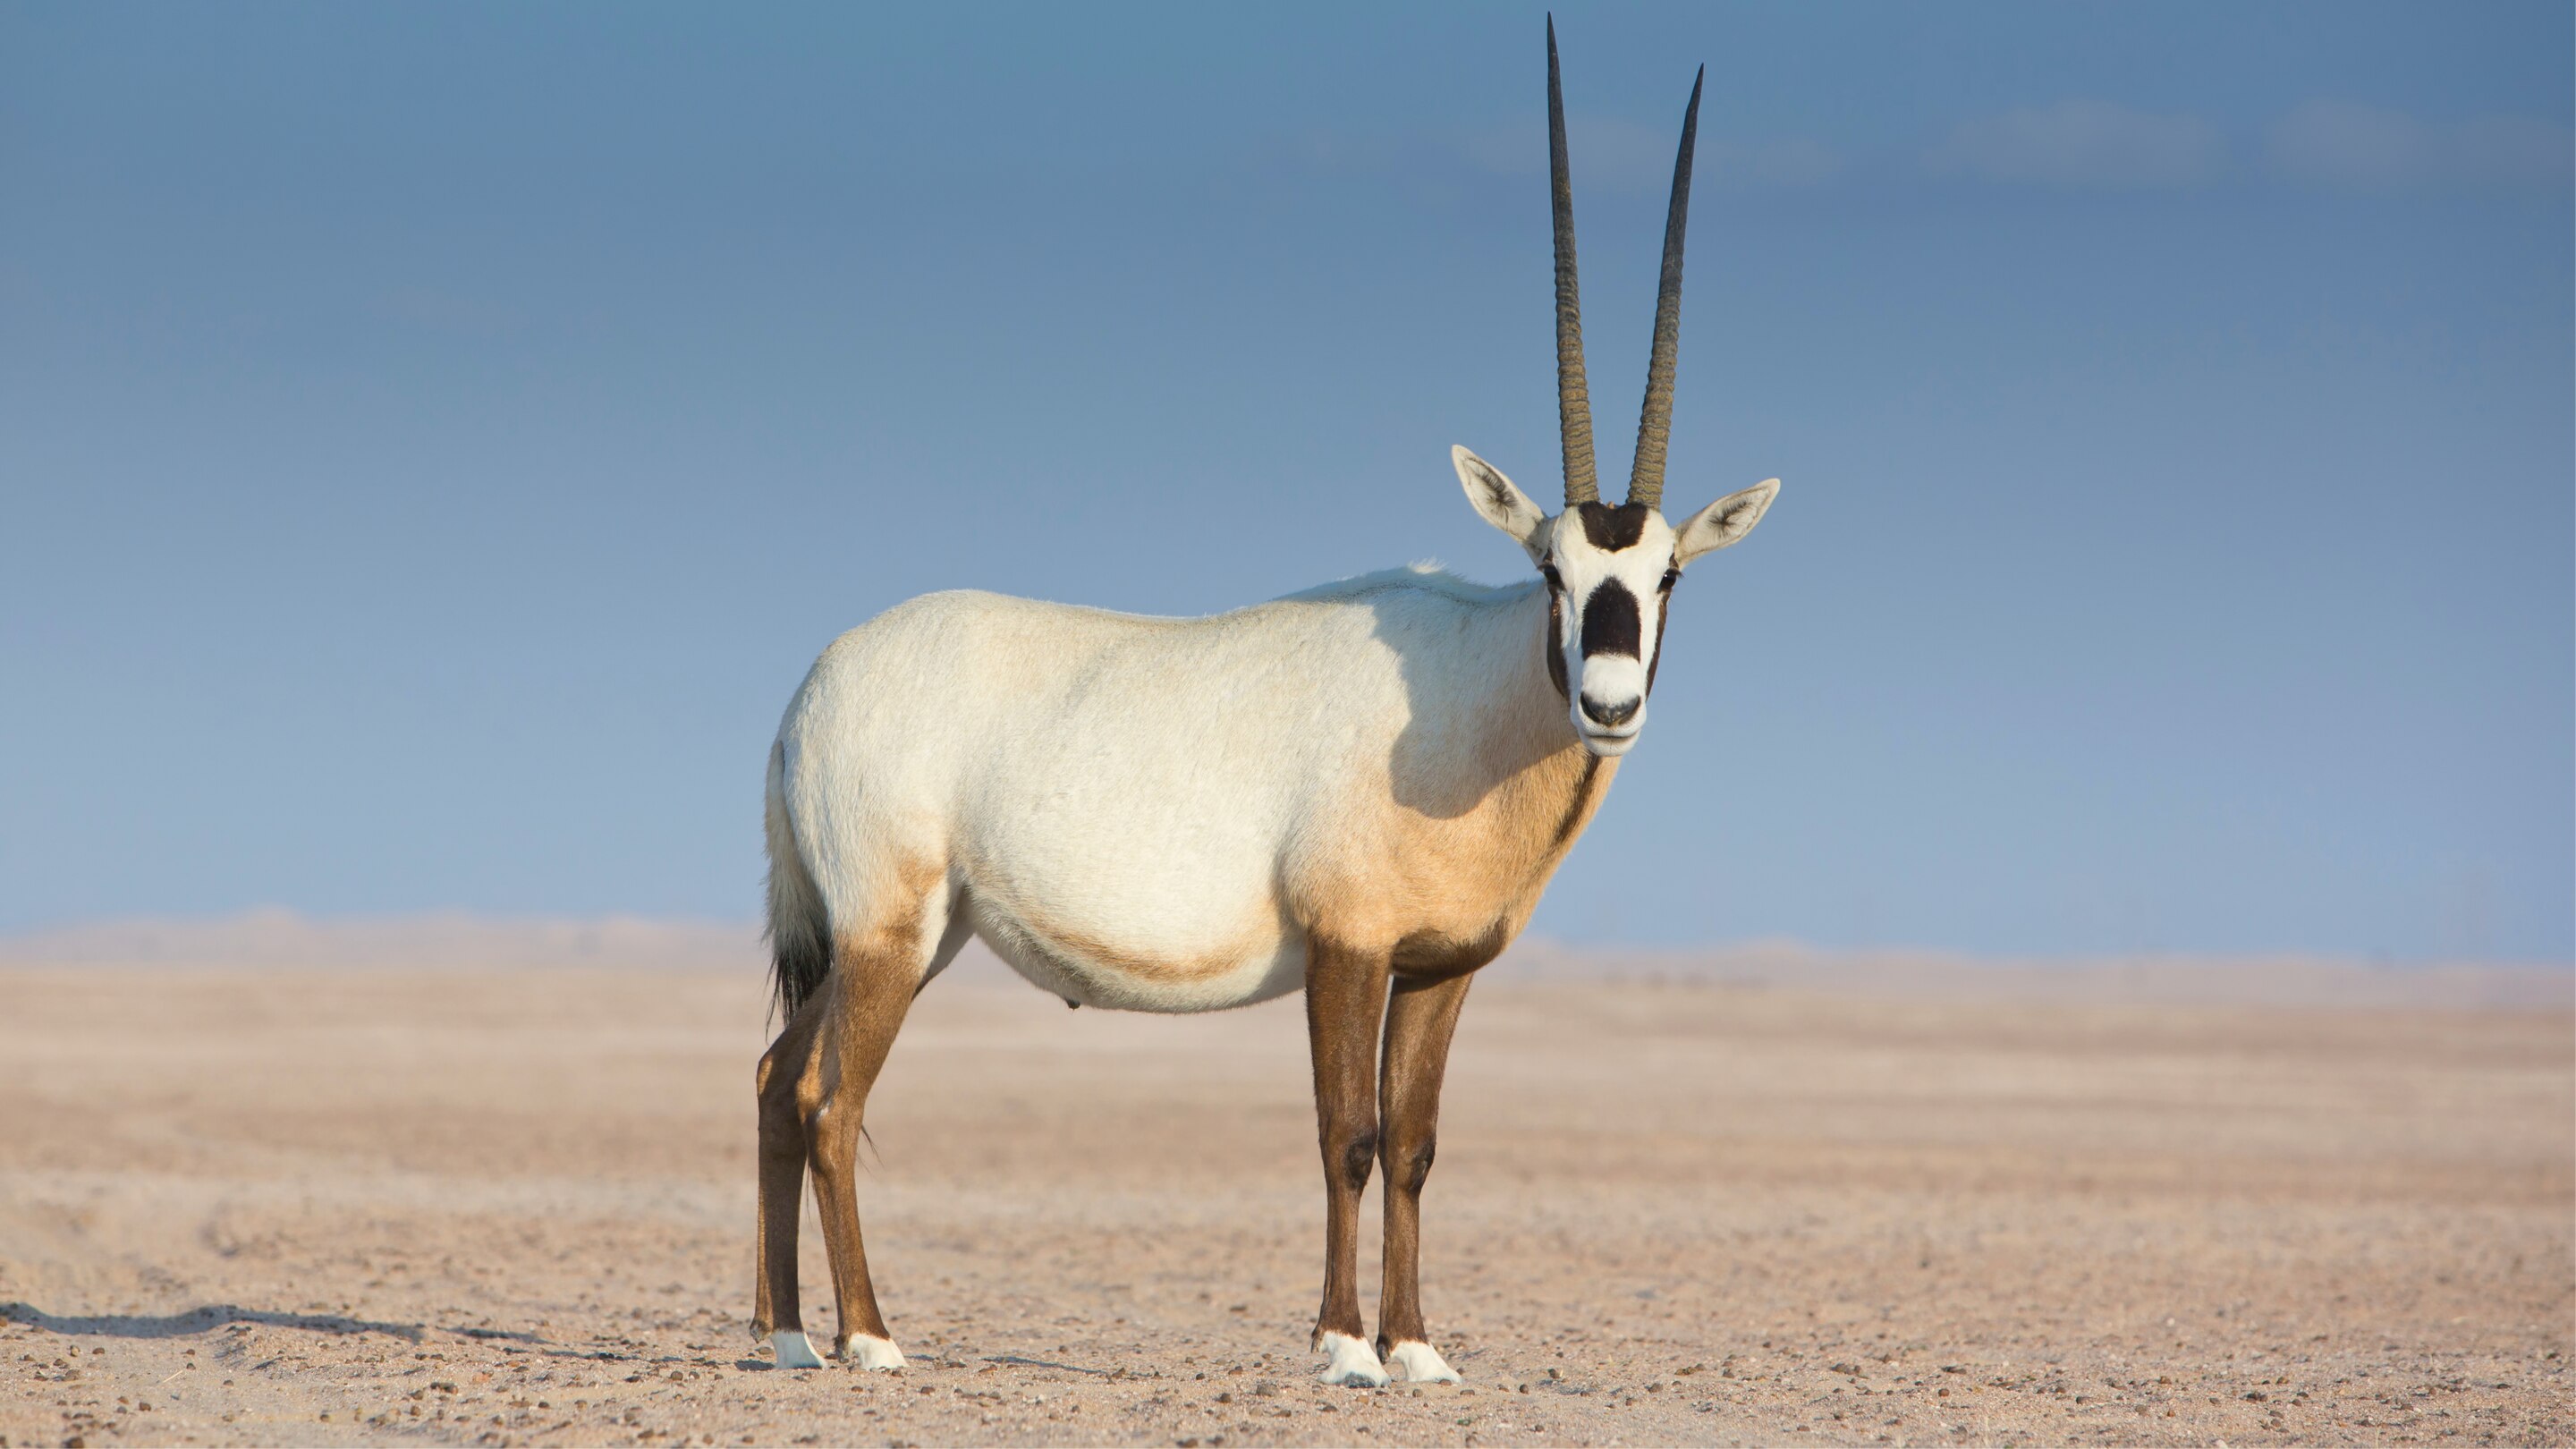 Animal adventures in Hatta Arabian Oryx